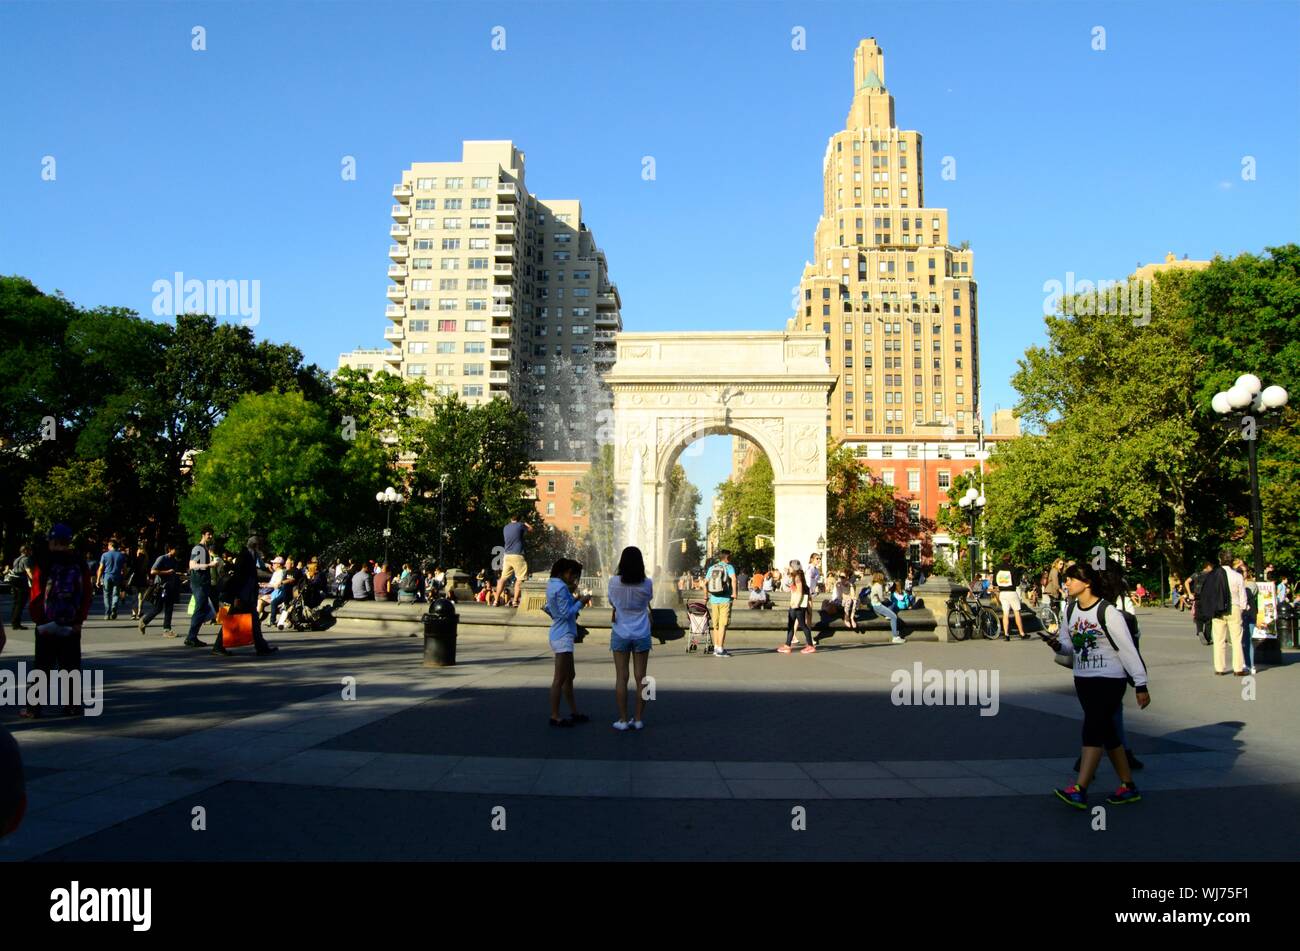 Washington Square Park in Lower Manhattan, New York Stock Photo